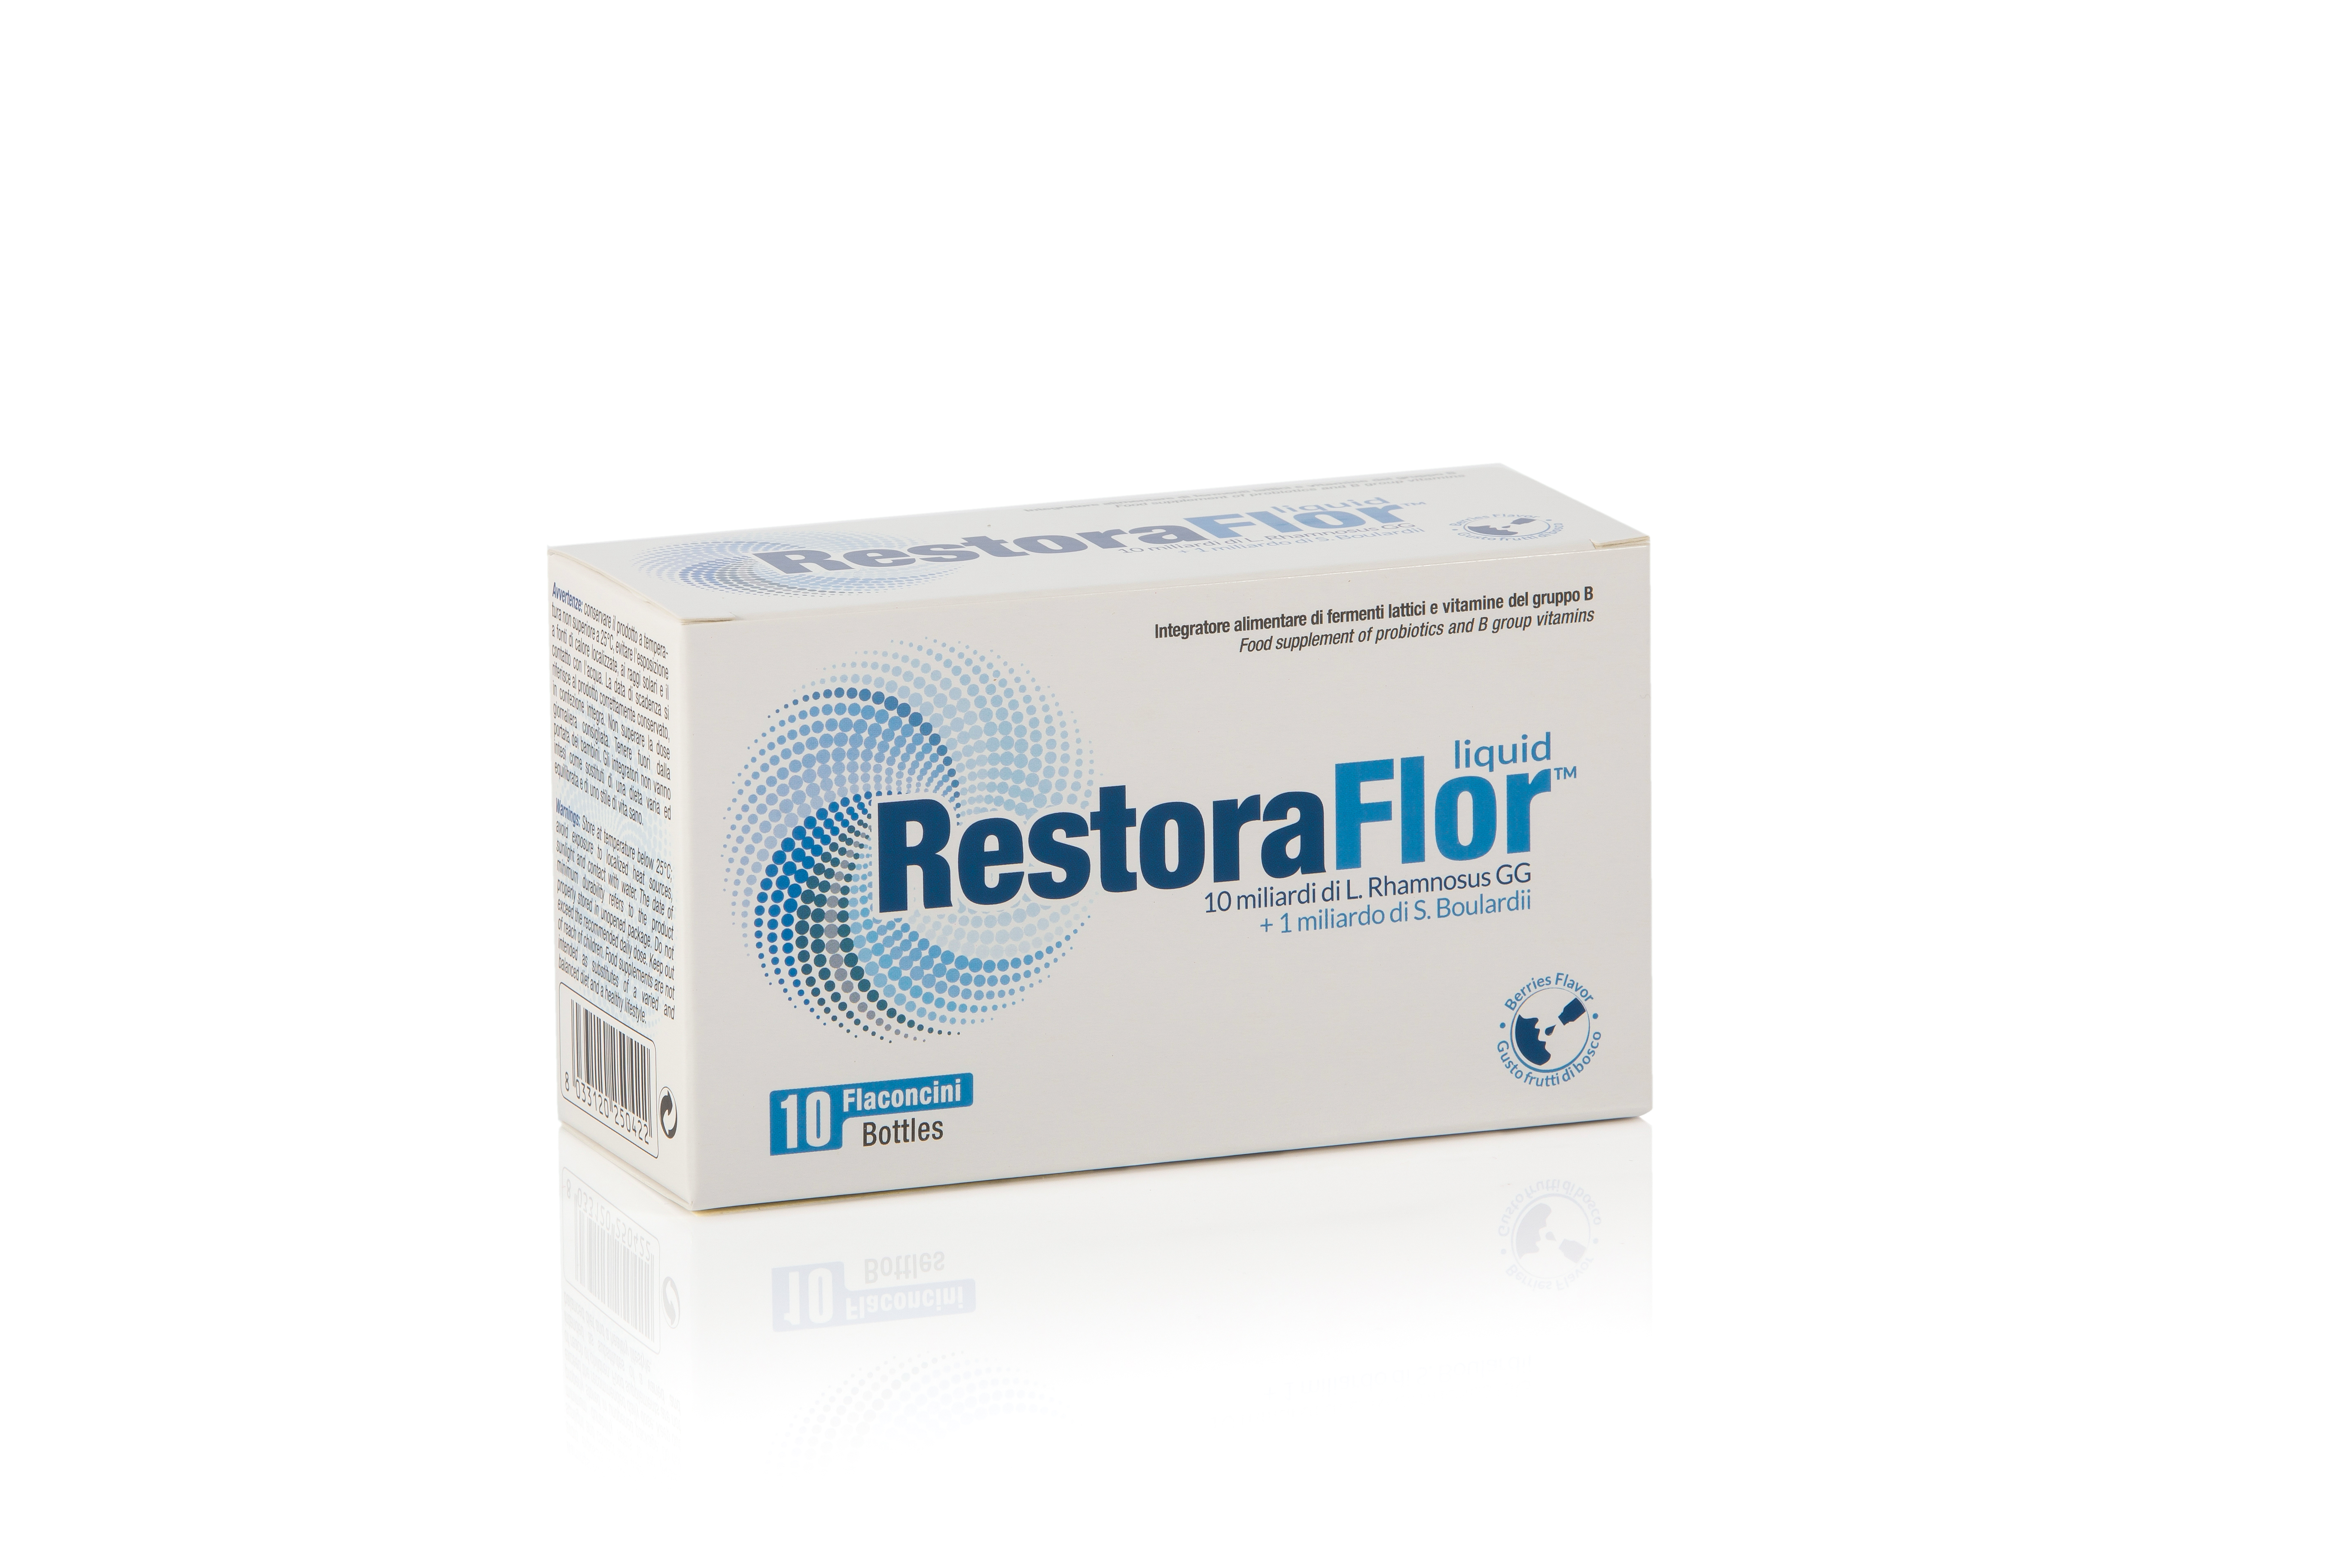 RestoraFlor™ liquid